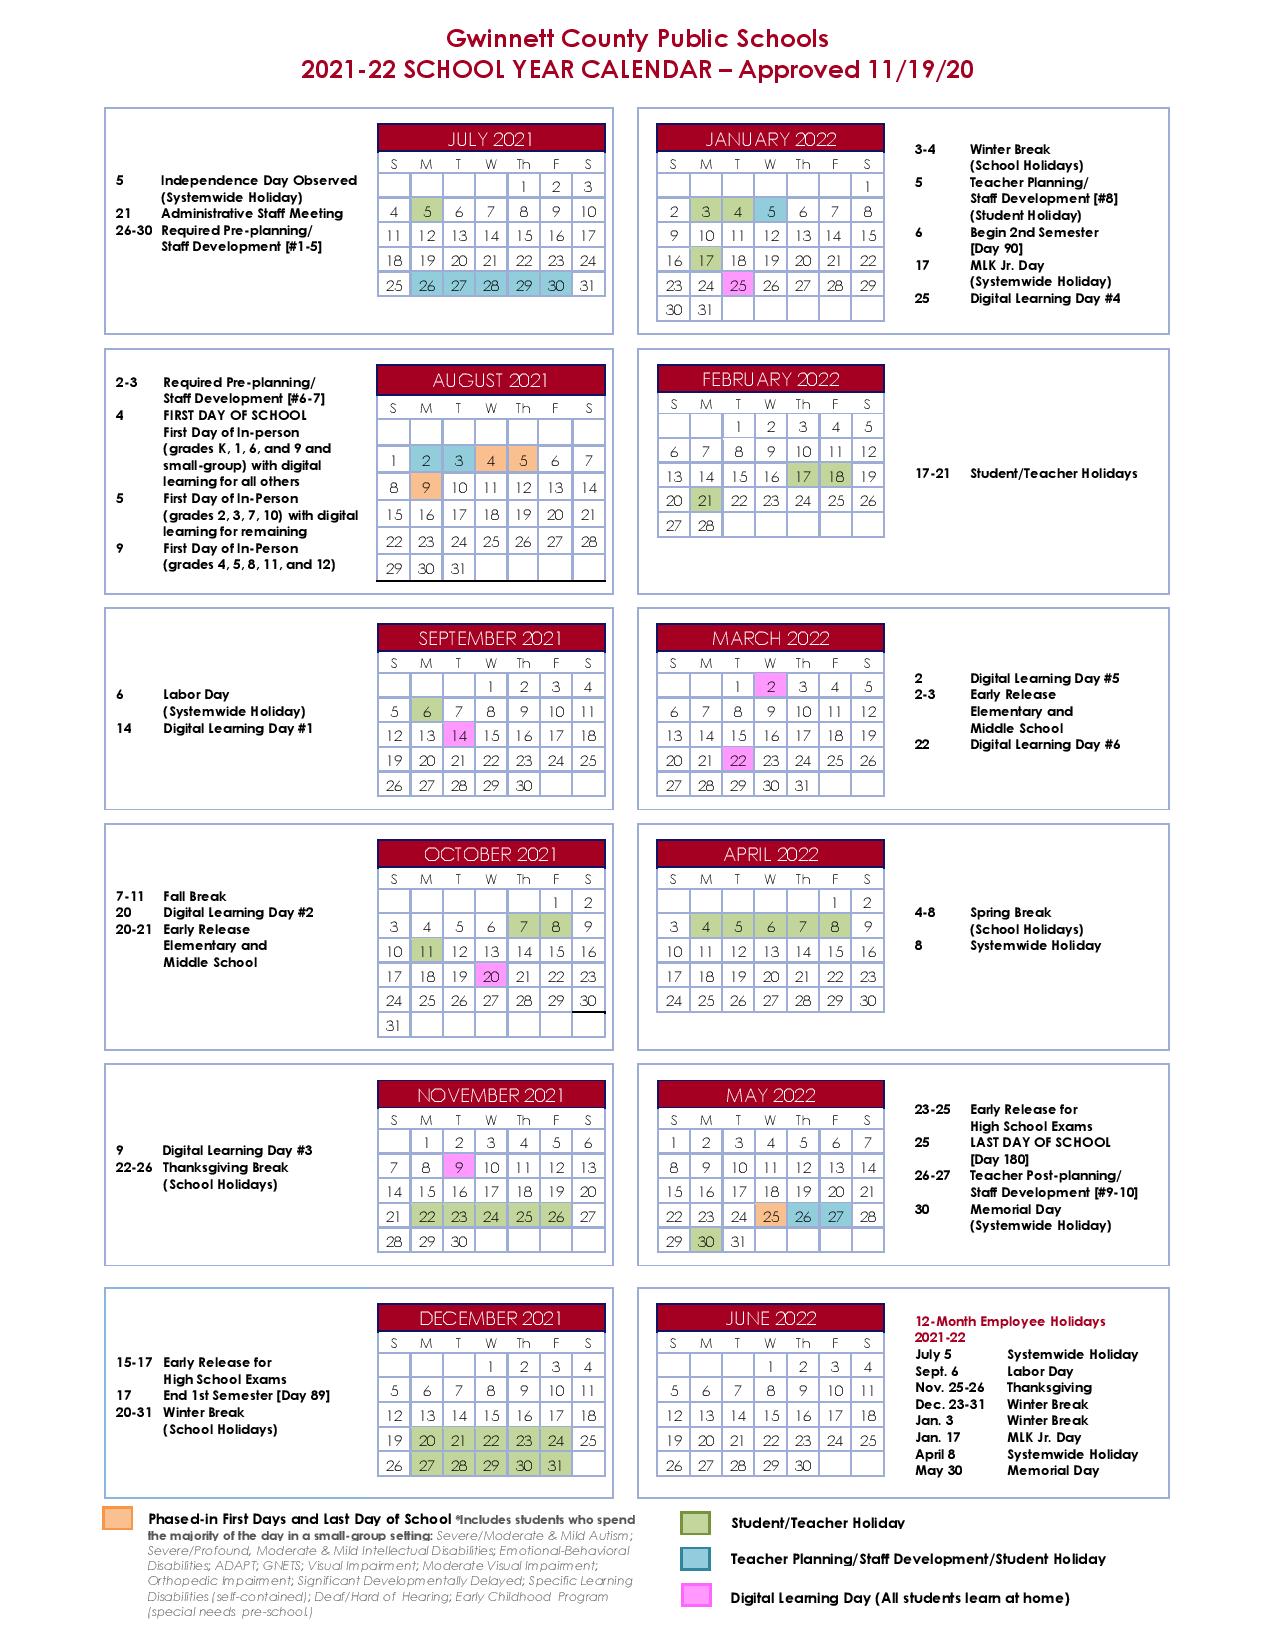 gwinnett-county-public-schools-calendar-2021-2022